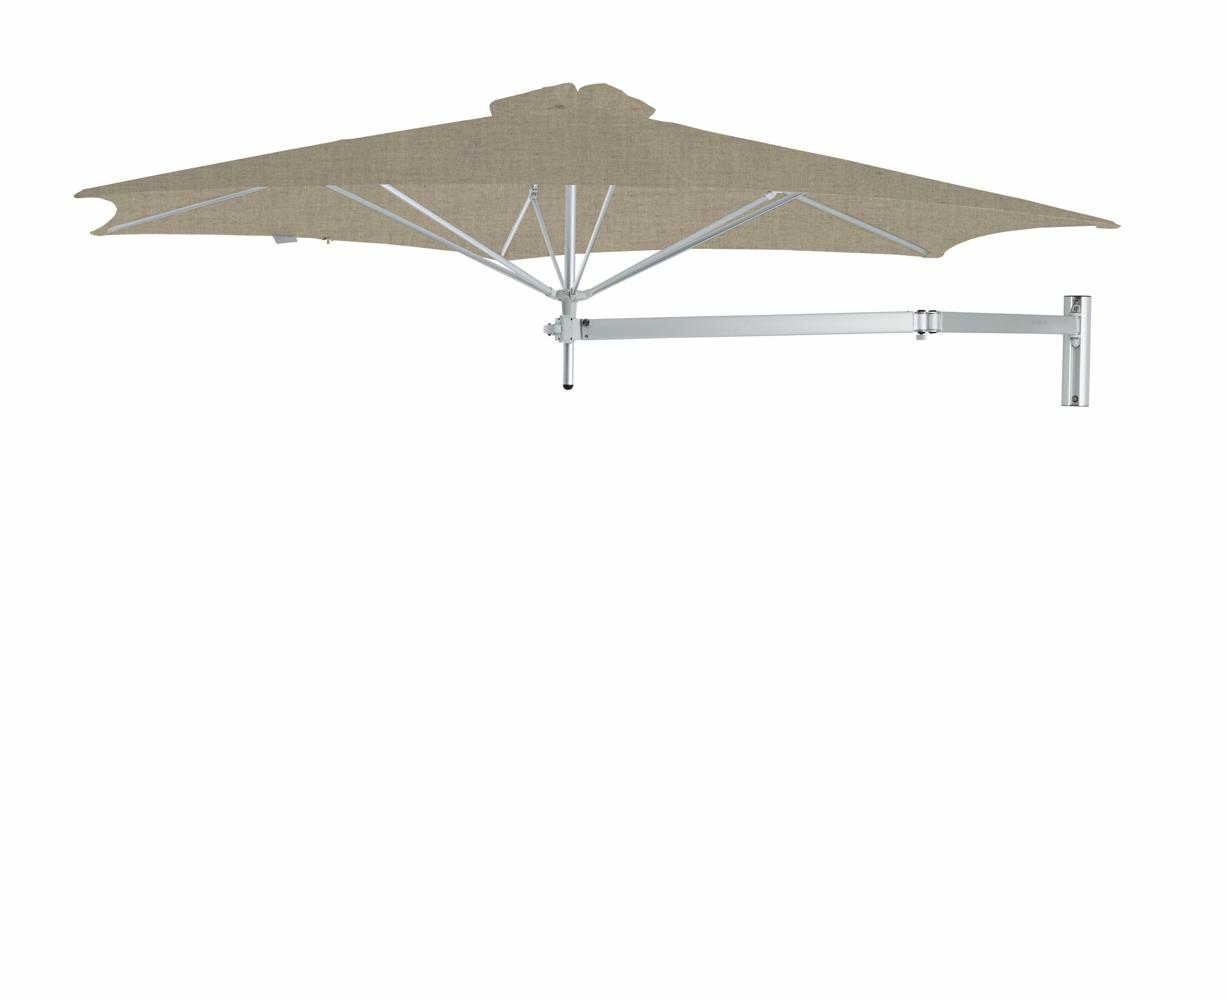 Paraflex canopy round 3 m in colour Sand